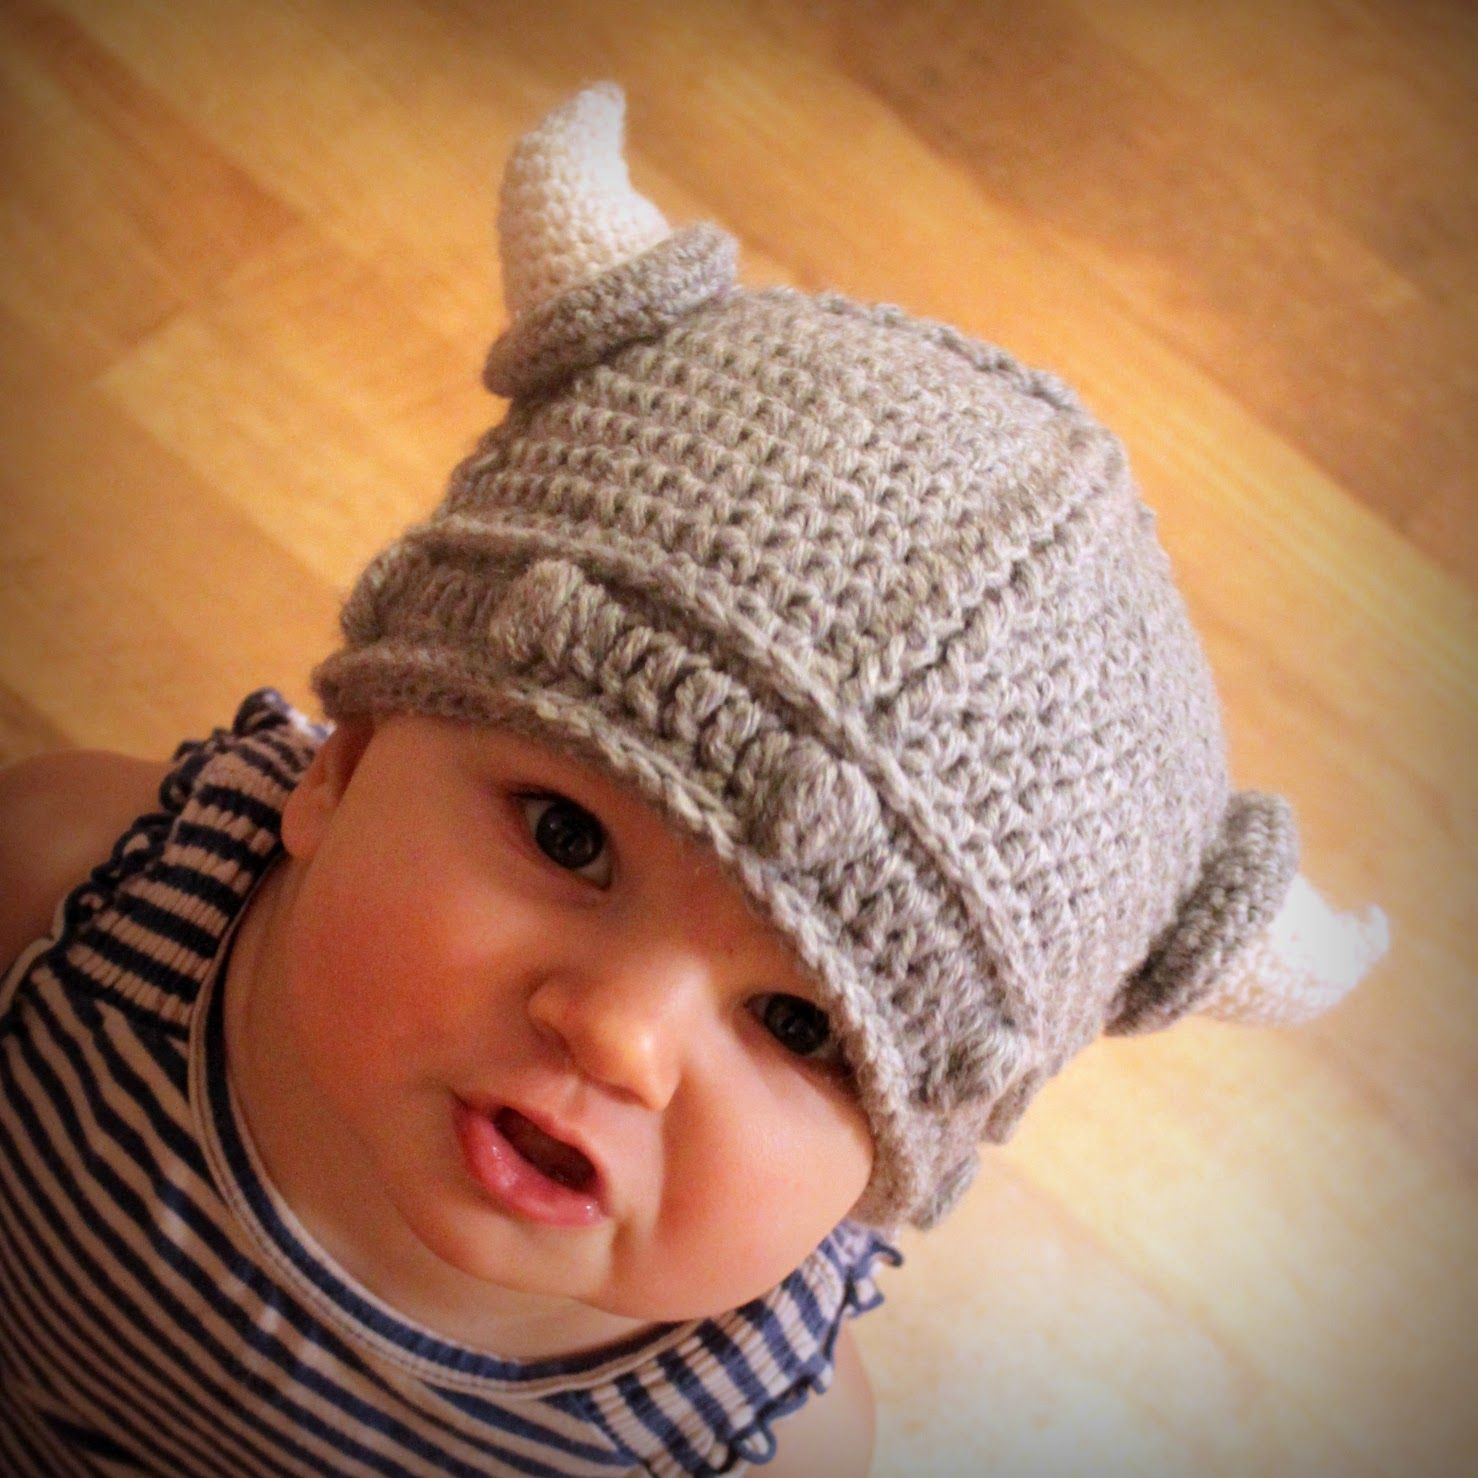 Crochet Baby Viking Hat Pattern Crochet For Free Lael Viking Hat Size Newborn Adult Crochet